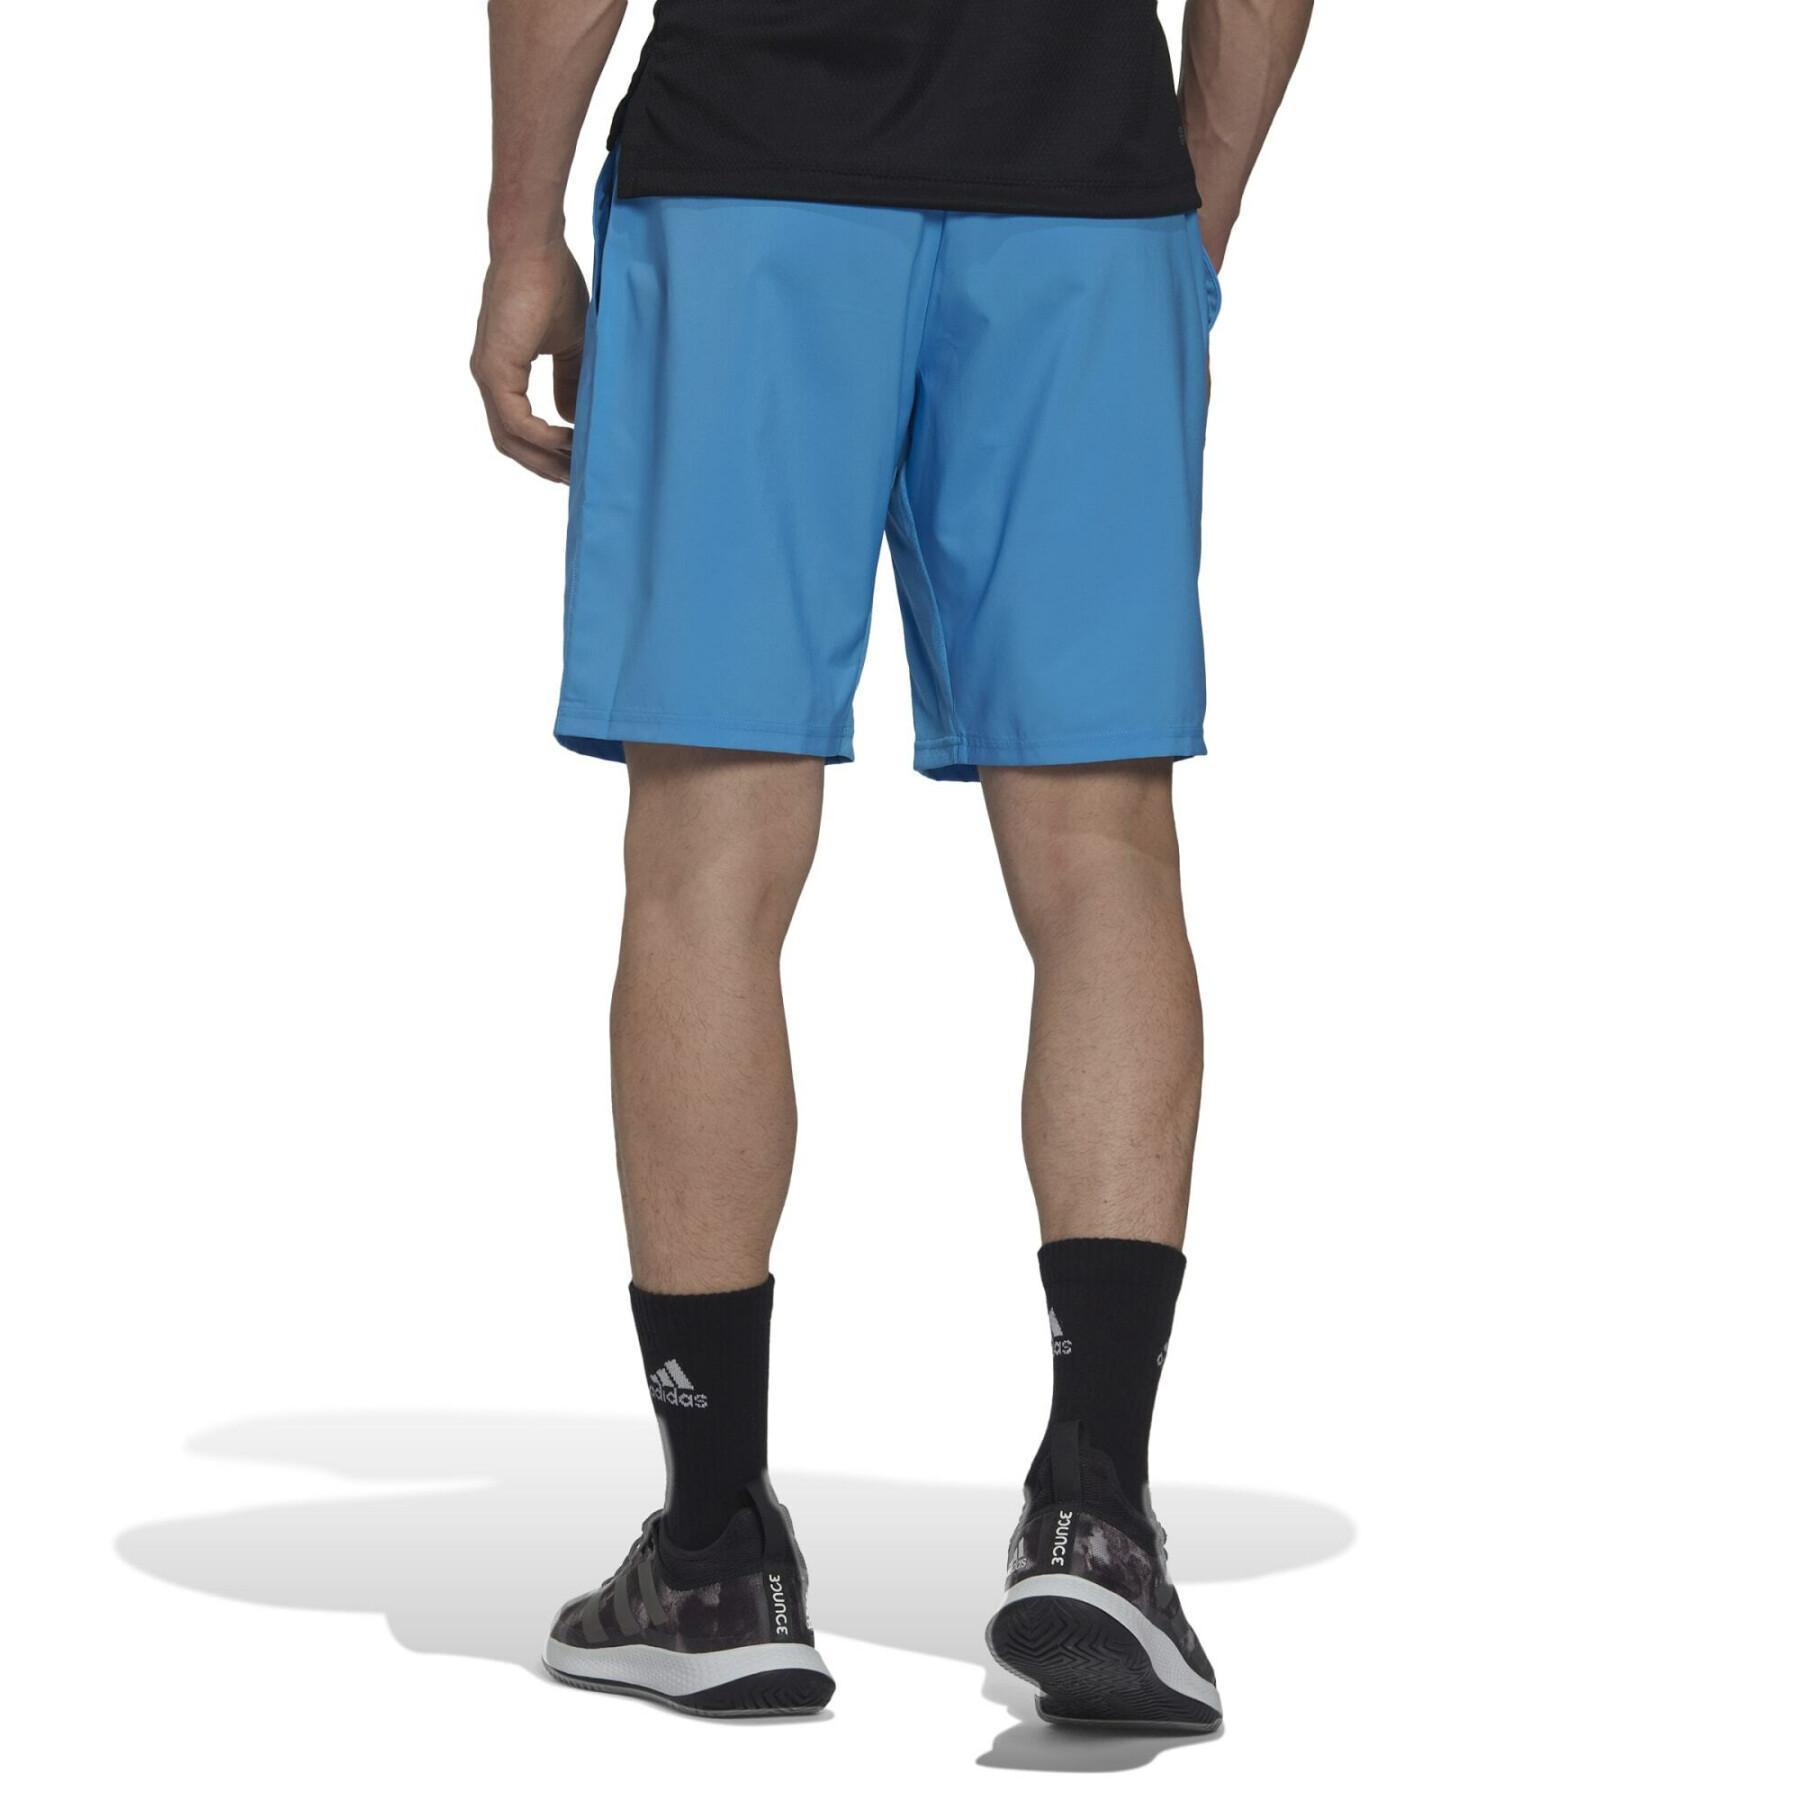 Tennis club shorts with 3 stripes adidas